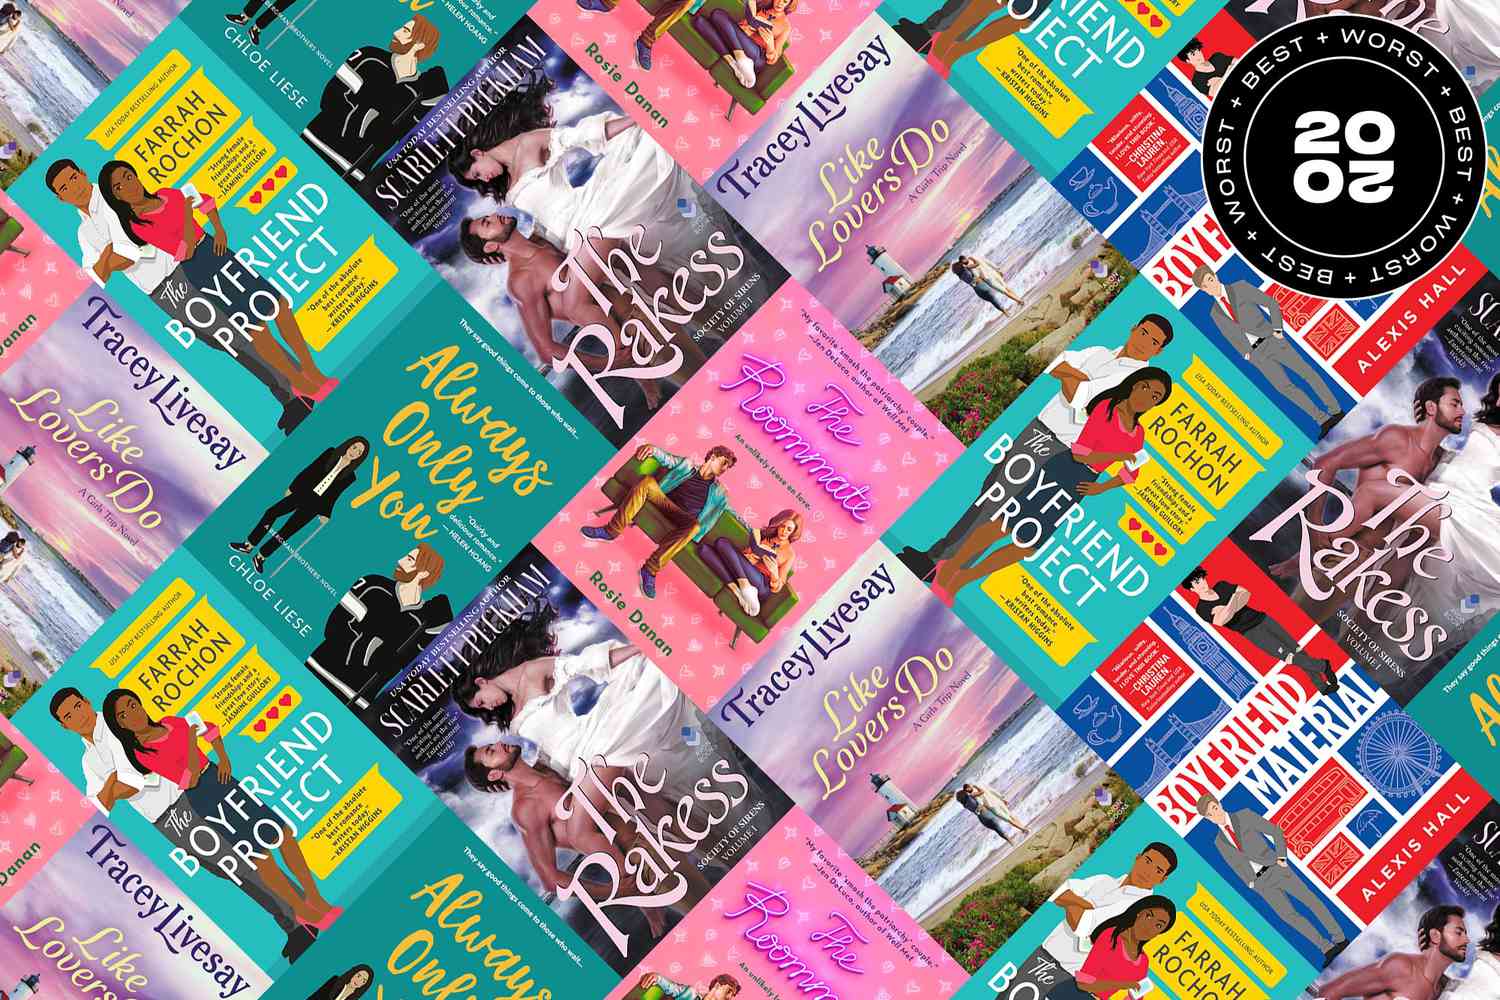 The 10 best romance novels of 2020 